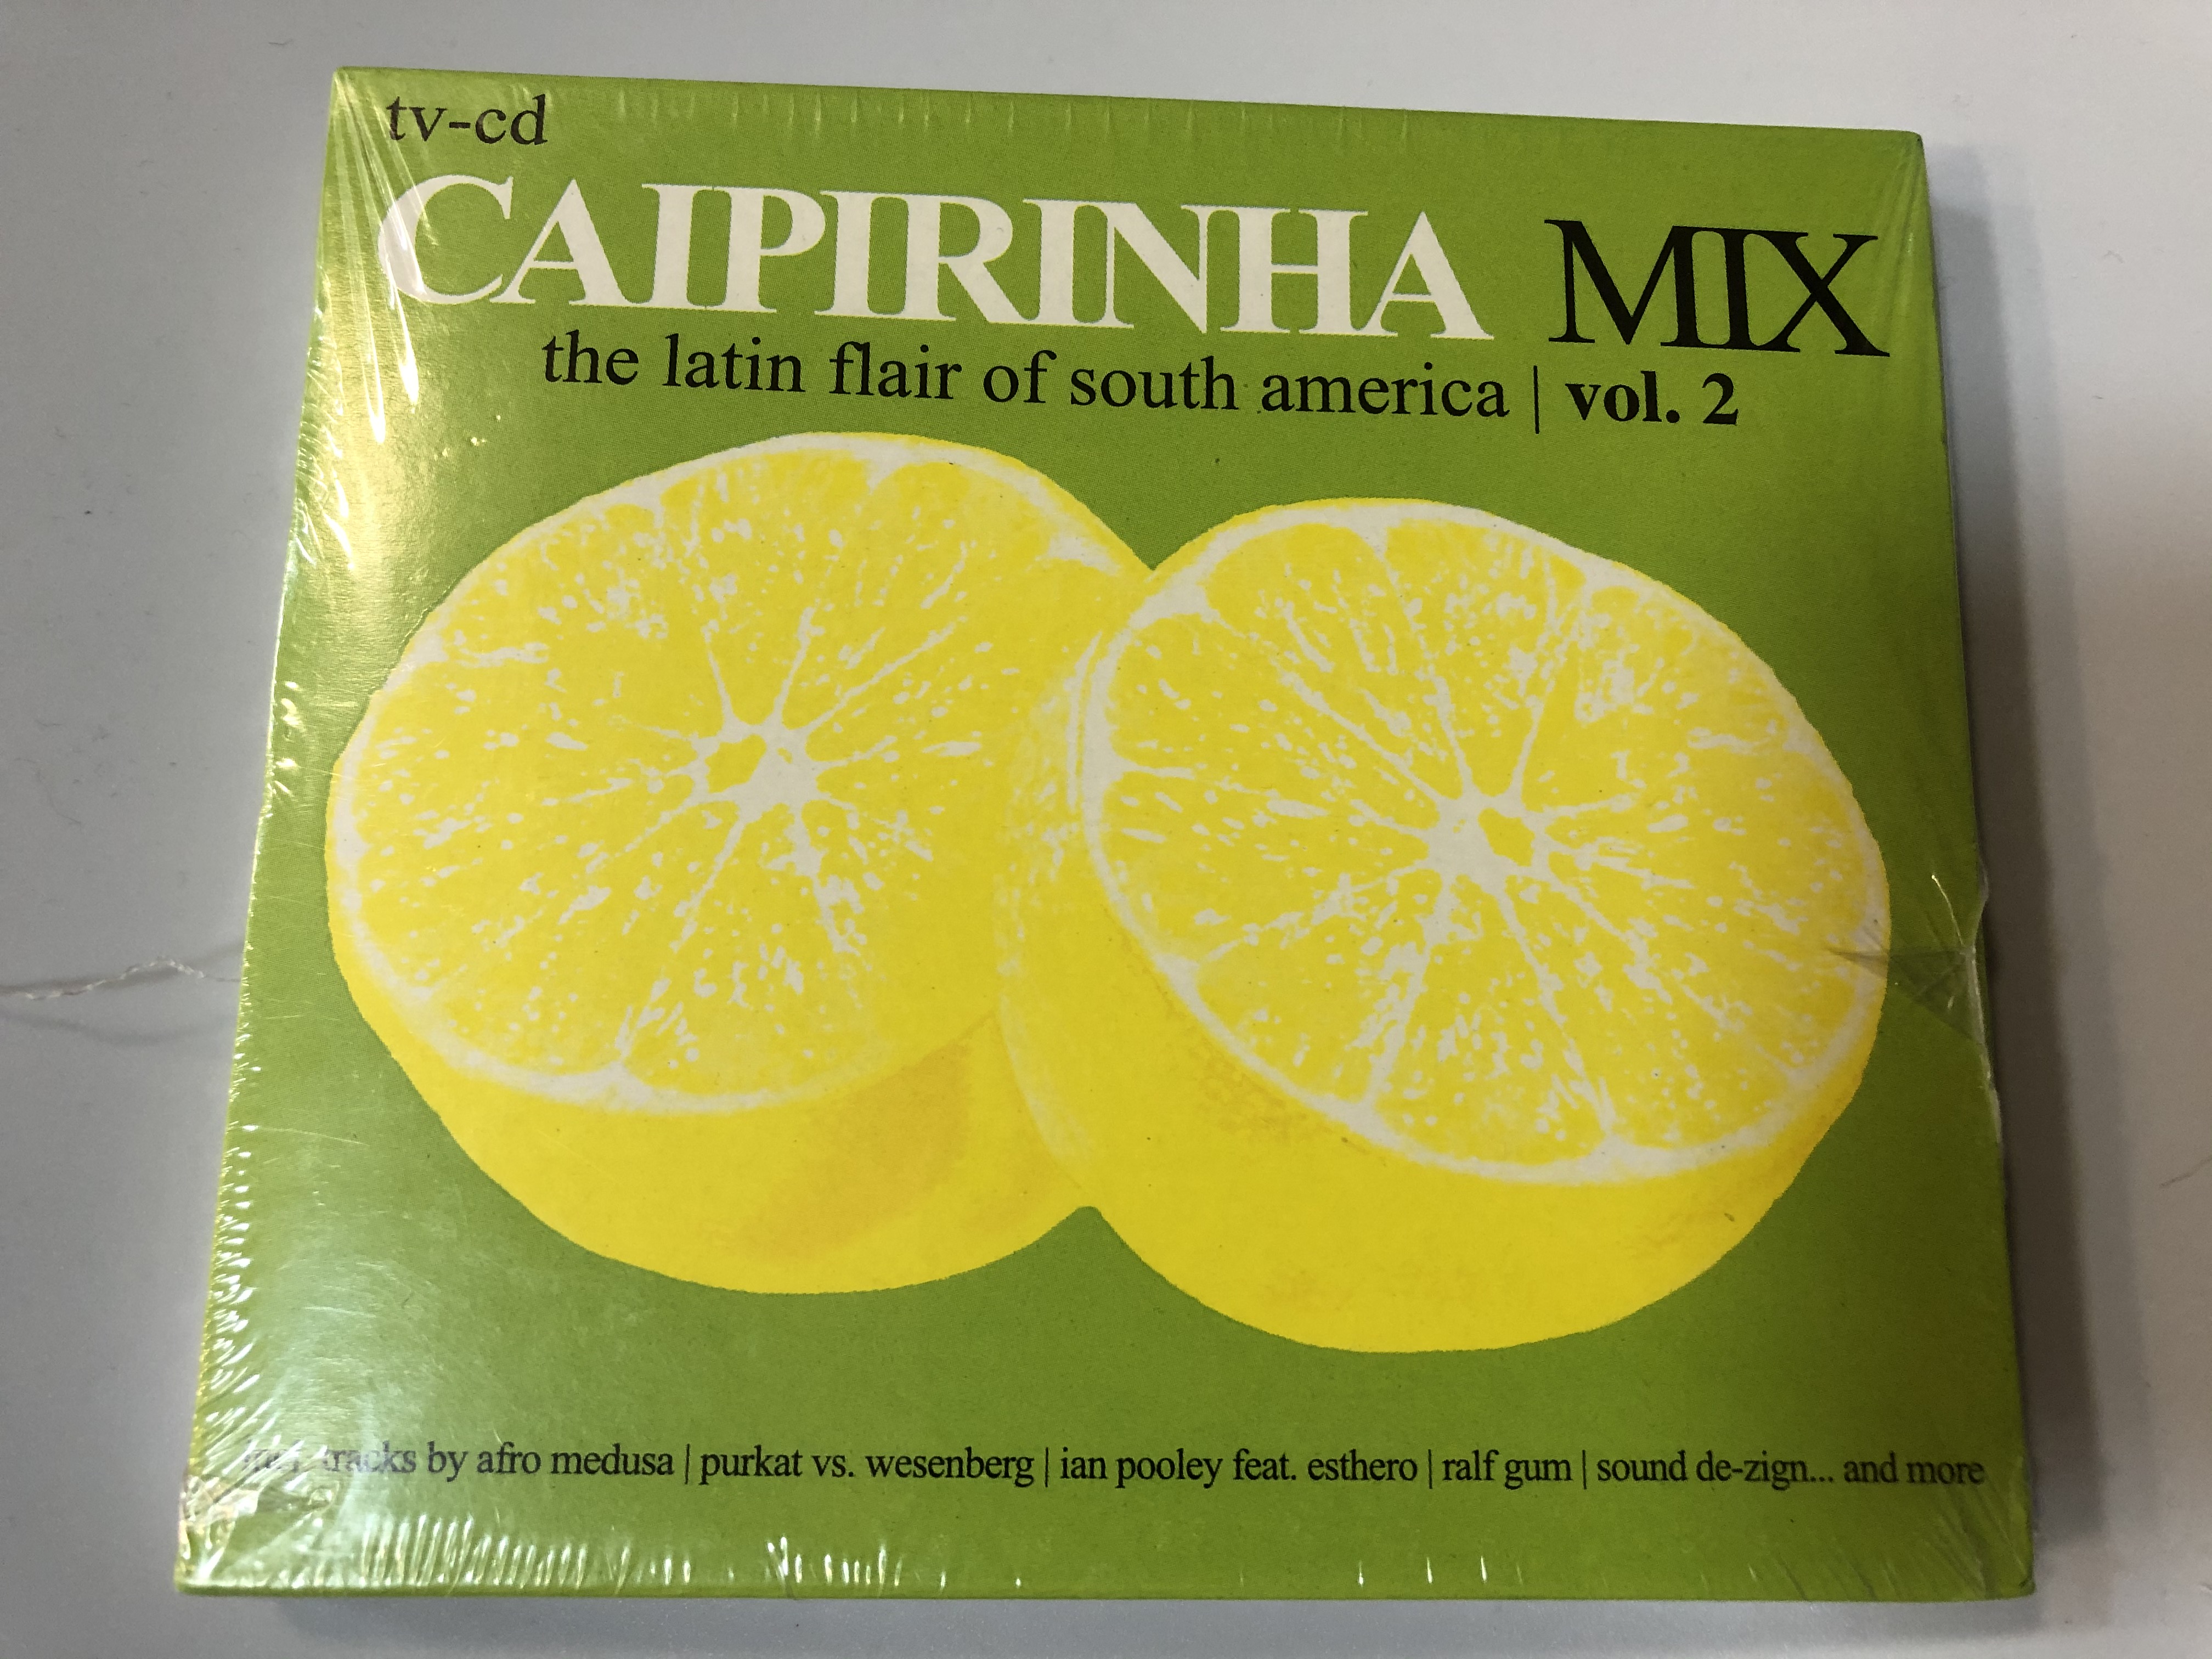 caipirinha-mix-the-latin-flair-of-south-america-vol.-2-incl.-tracks-by-afro-medusa-purkat-vs.-wesenberg-ian-pooley-feat.-esthero-ralf-gum-sound-de-zign-and-many-more-zyx-music-zyx-1-.jpg